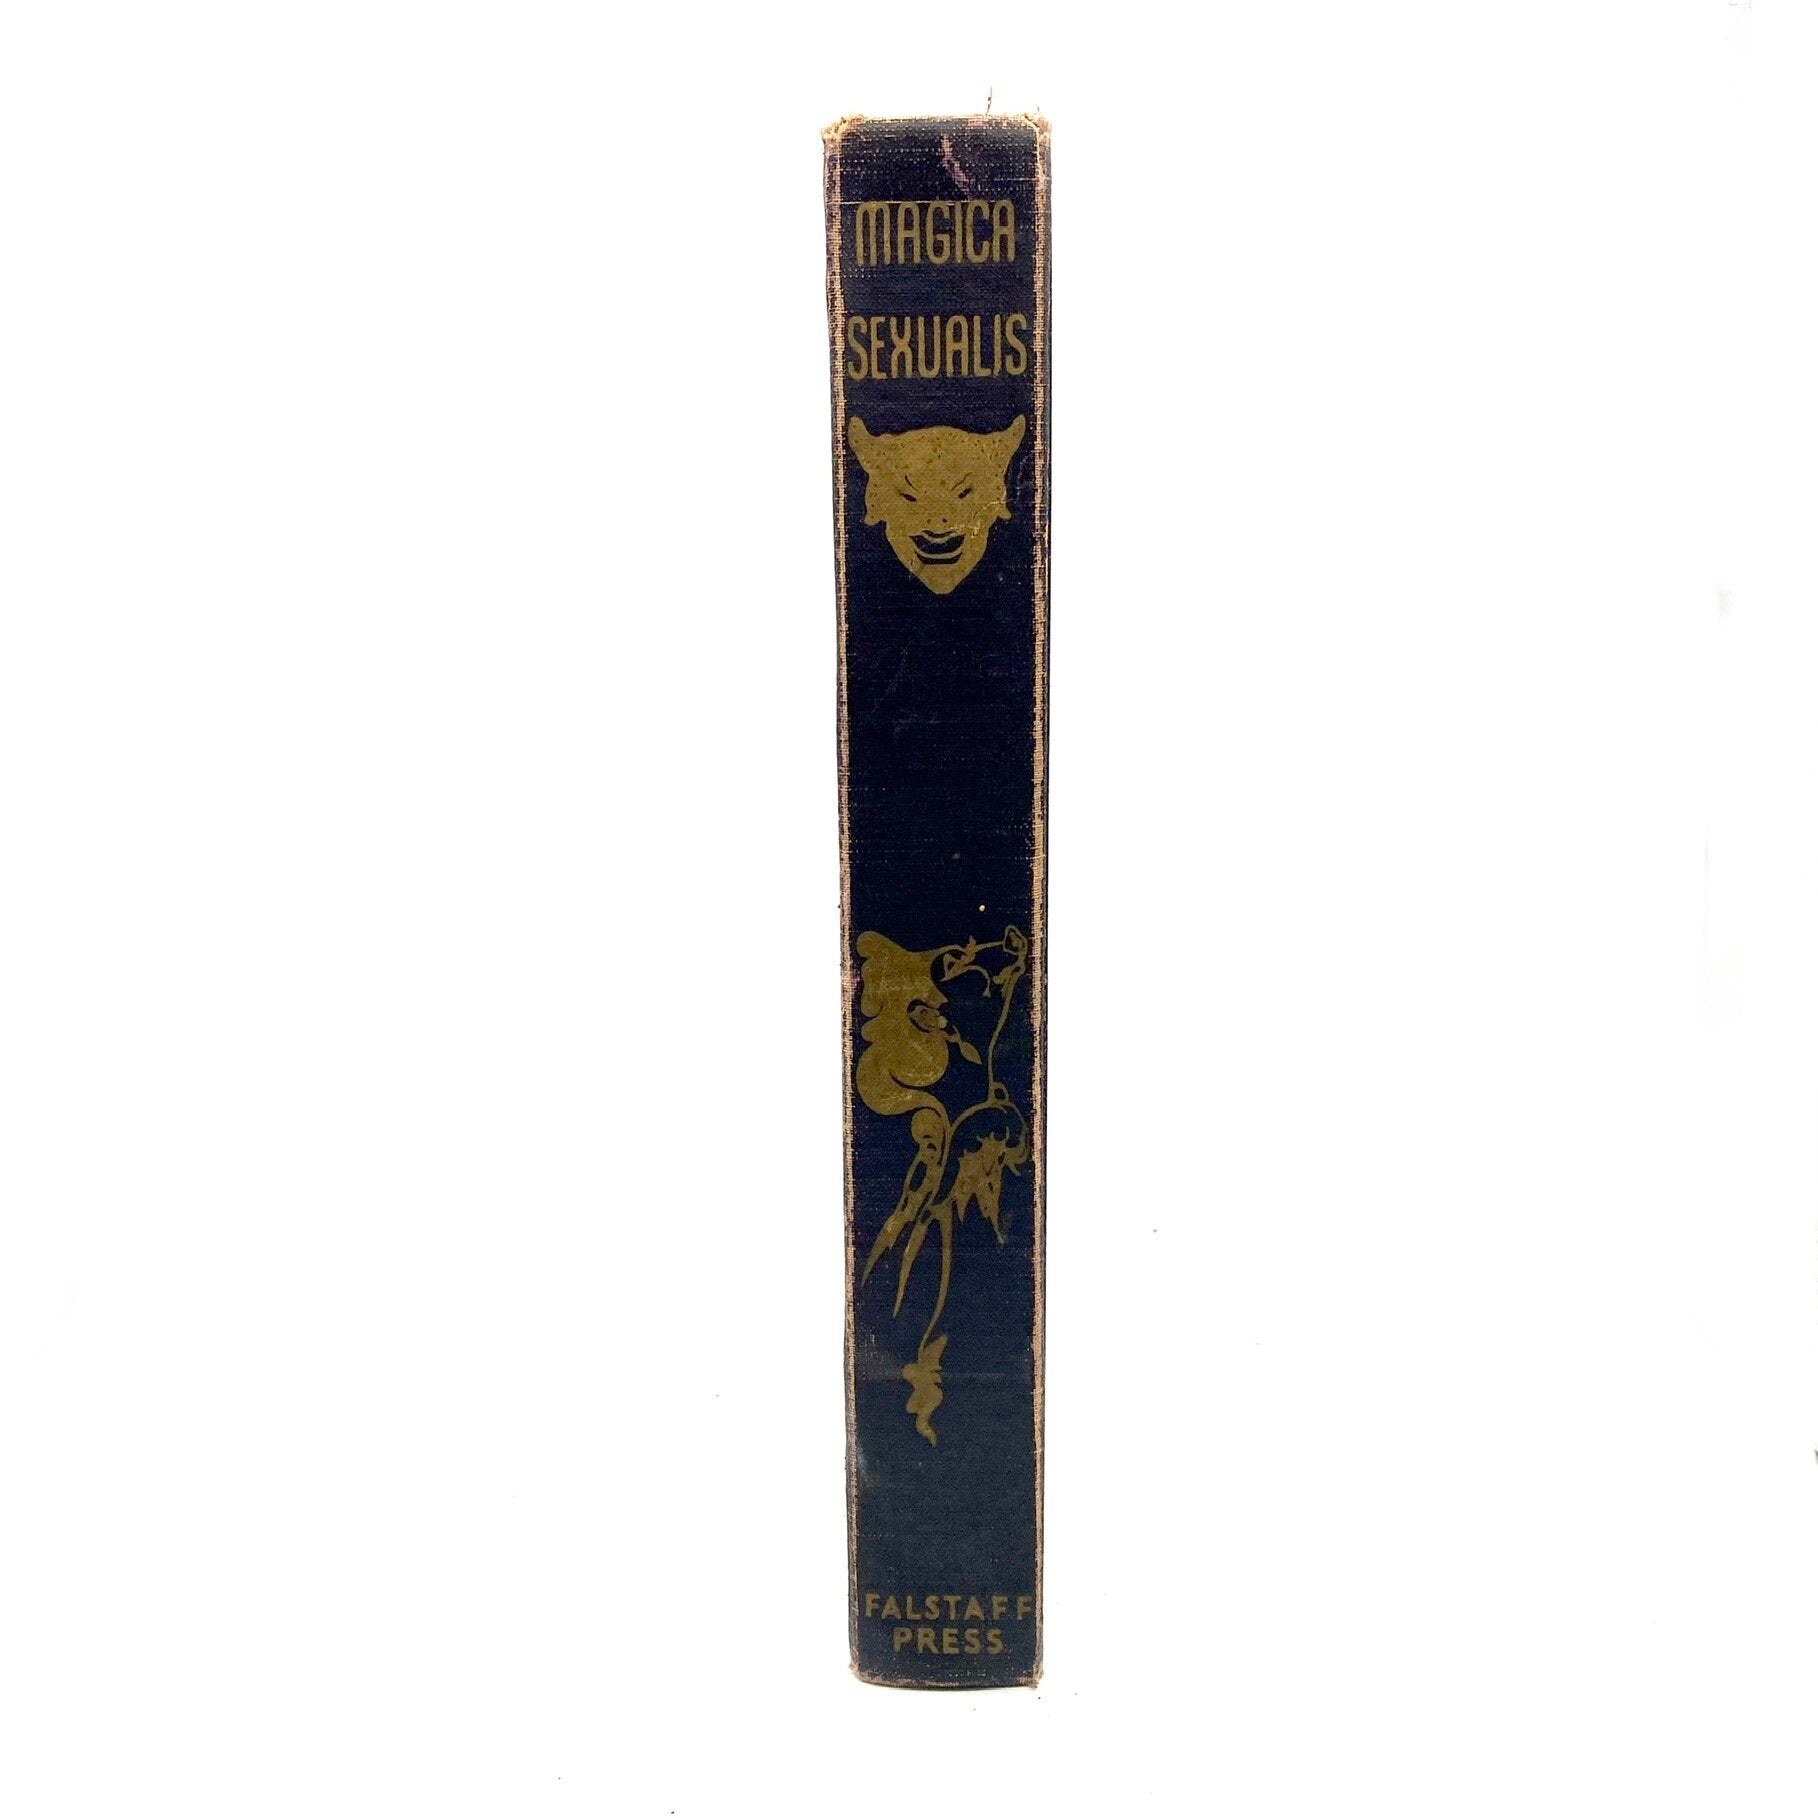 LAURENT, Emile and NAGOUR, Paul "Magica Sexualis" [Falstaff Press, 1934] - Buzz Bookstore